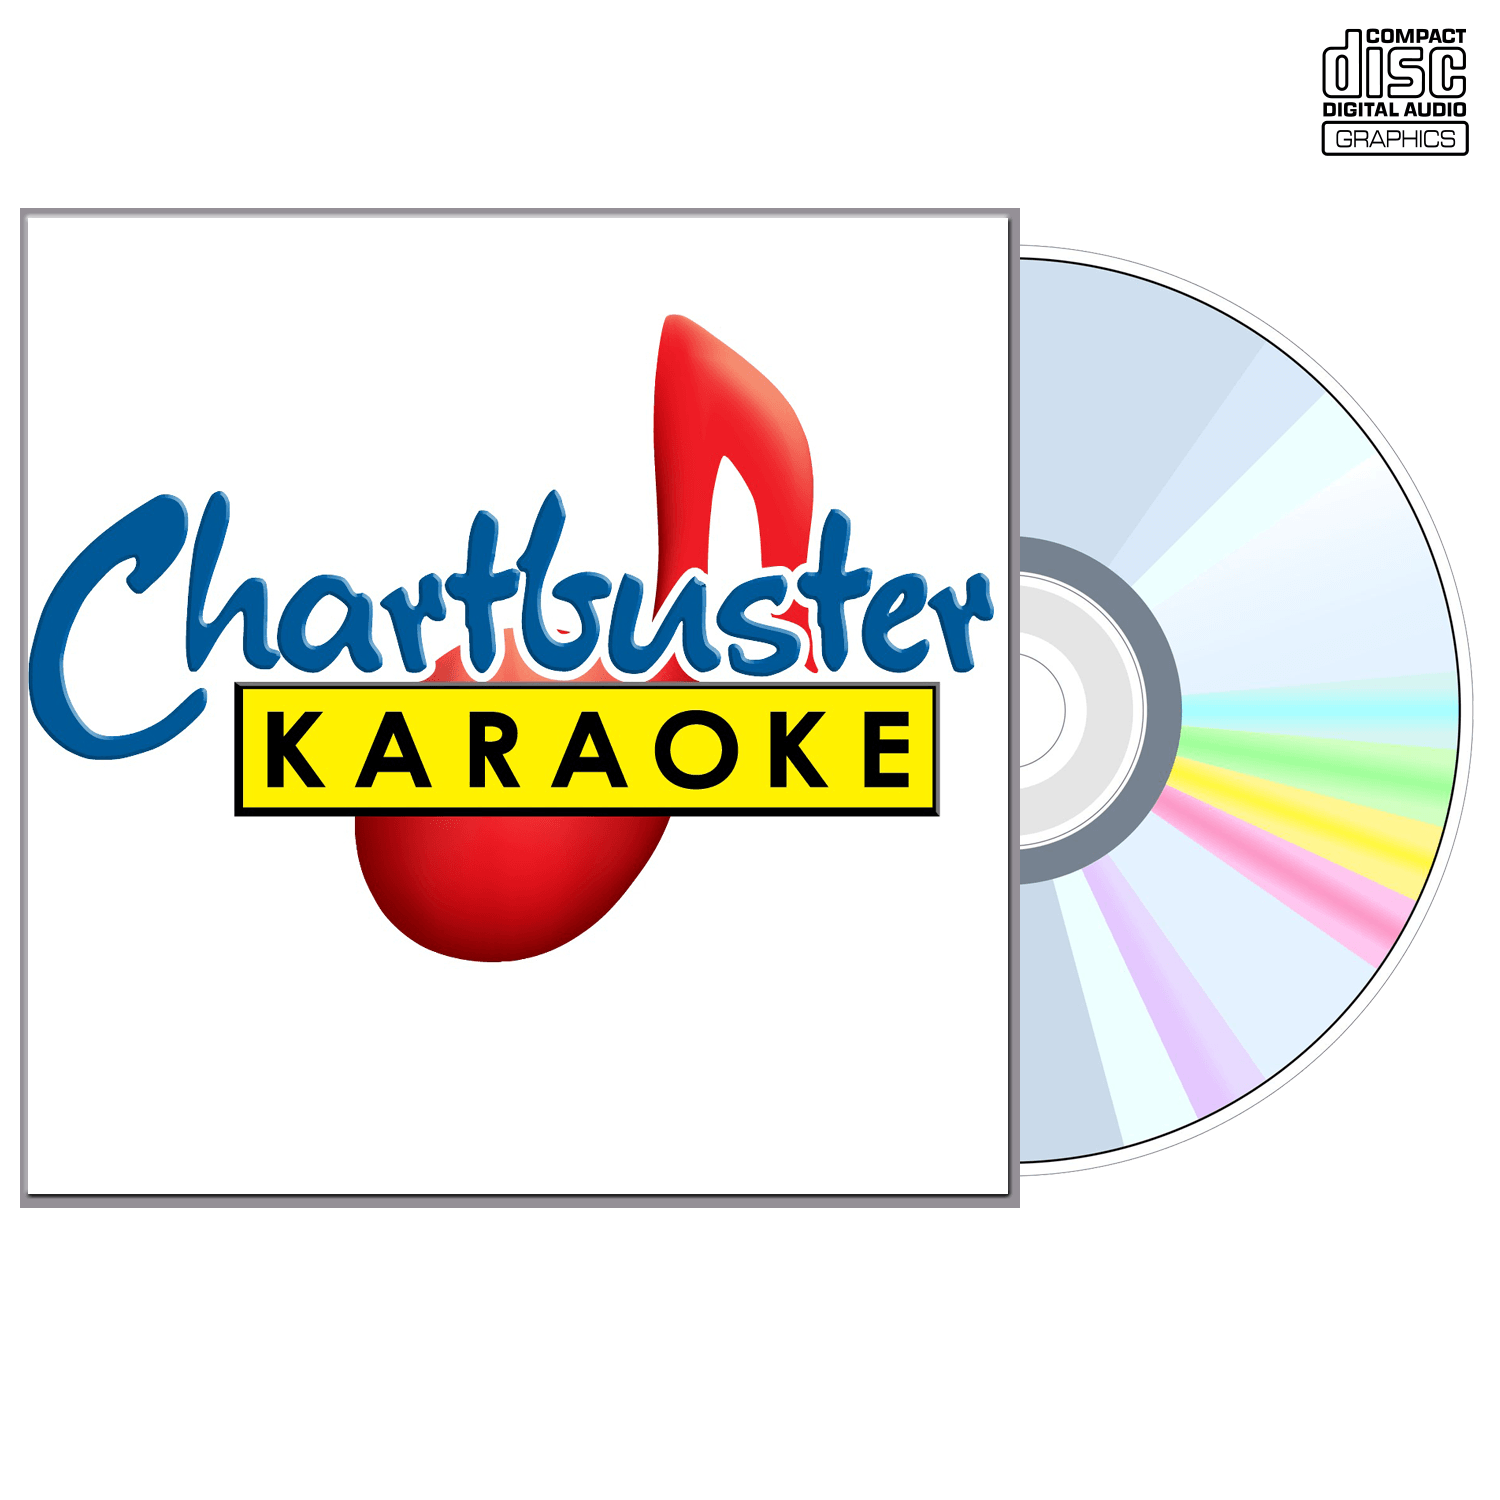 70's Collection Vol 20 - CD+G - Chartbuster Karaoke - Karaoke Home Entertainment